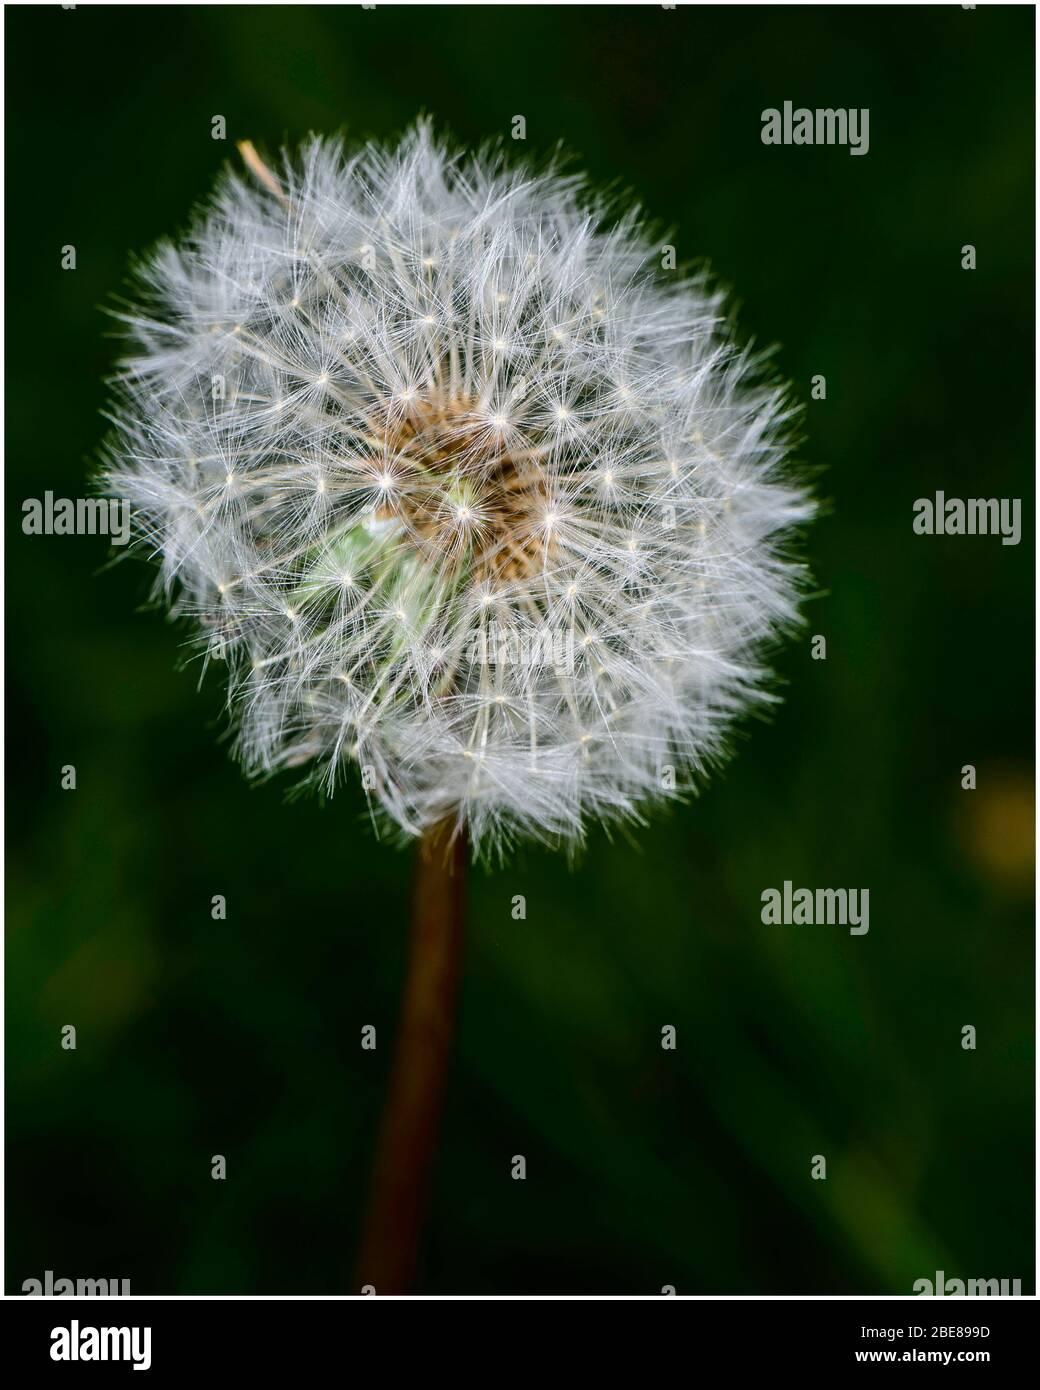 Dandelion seedhead Stock Photo